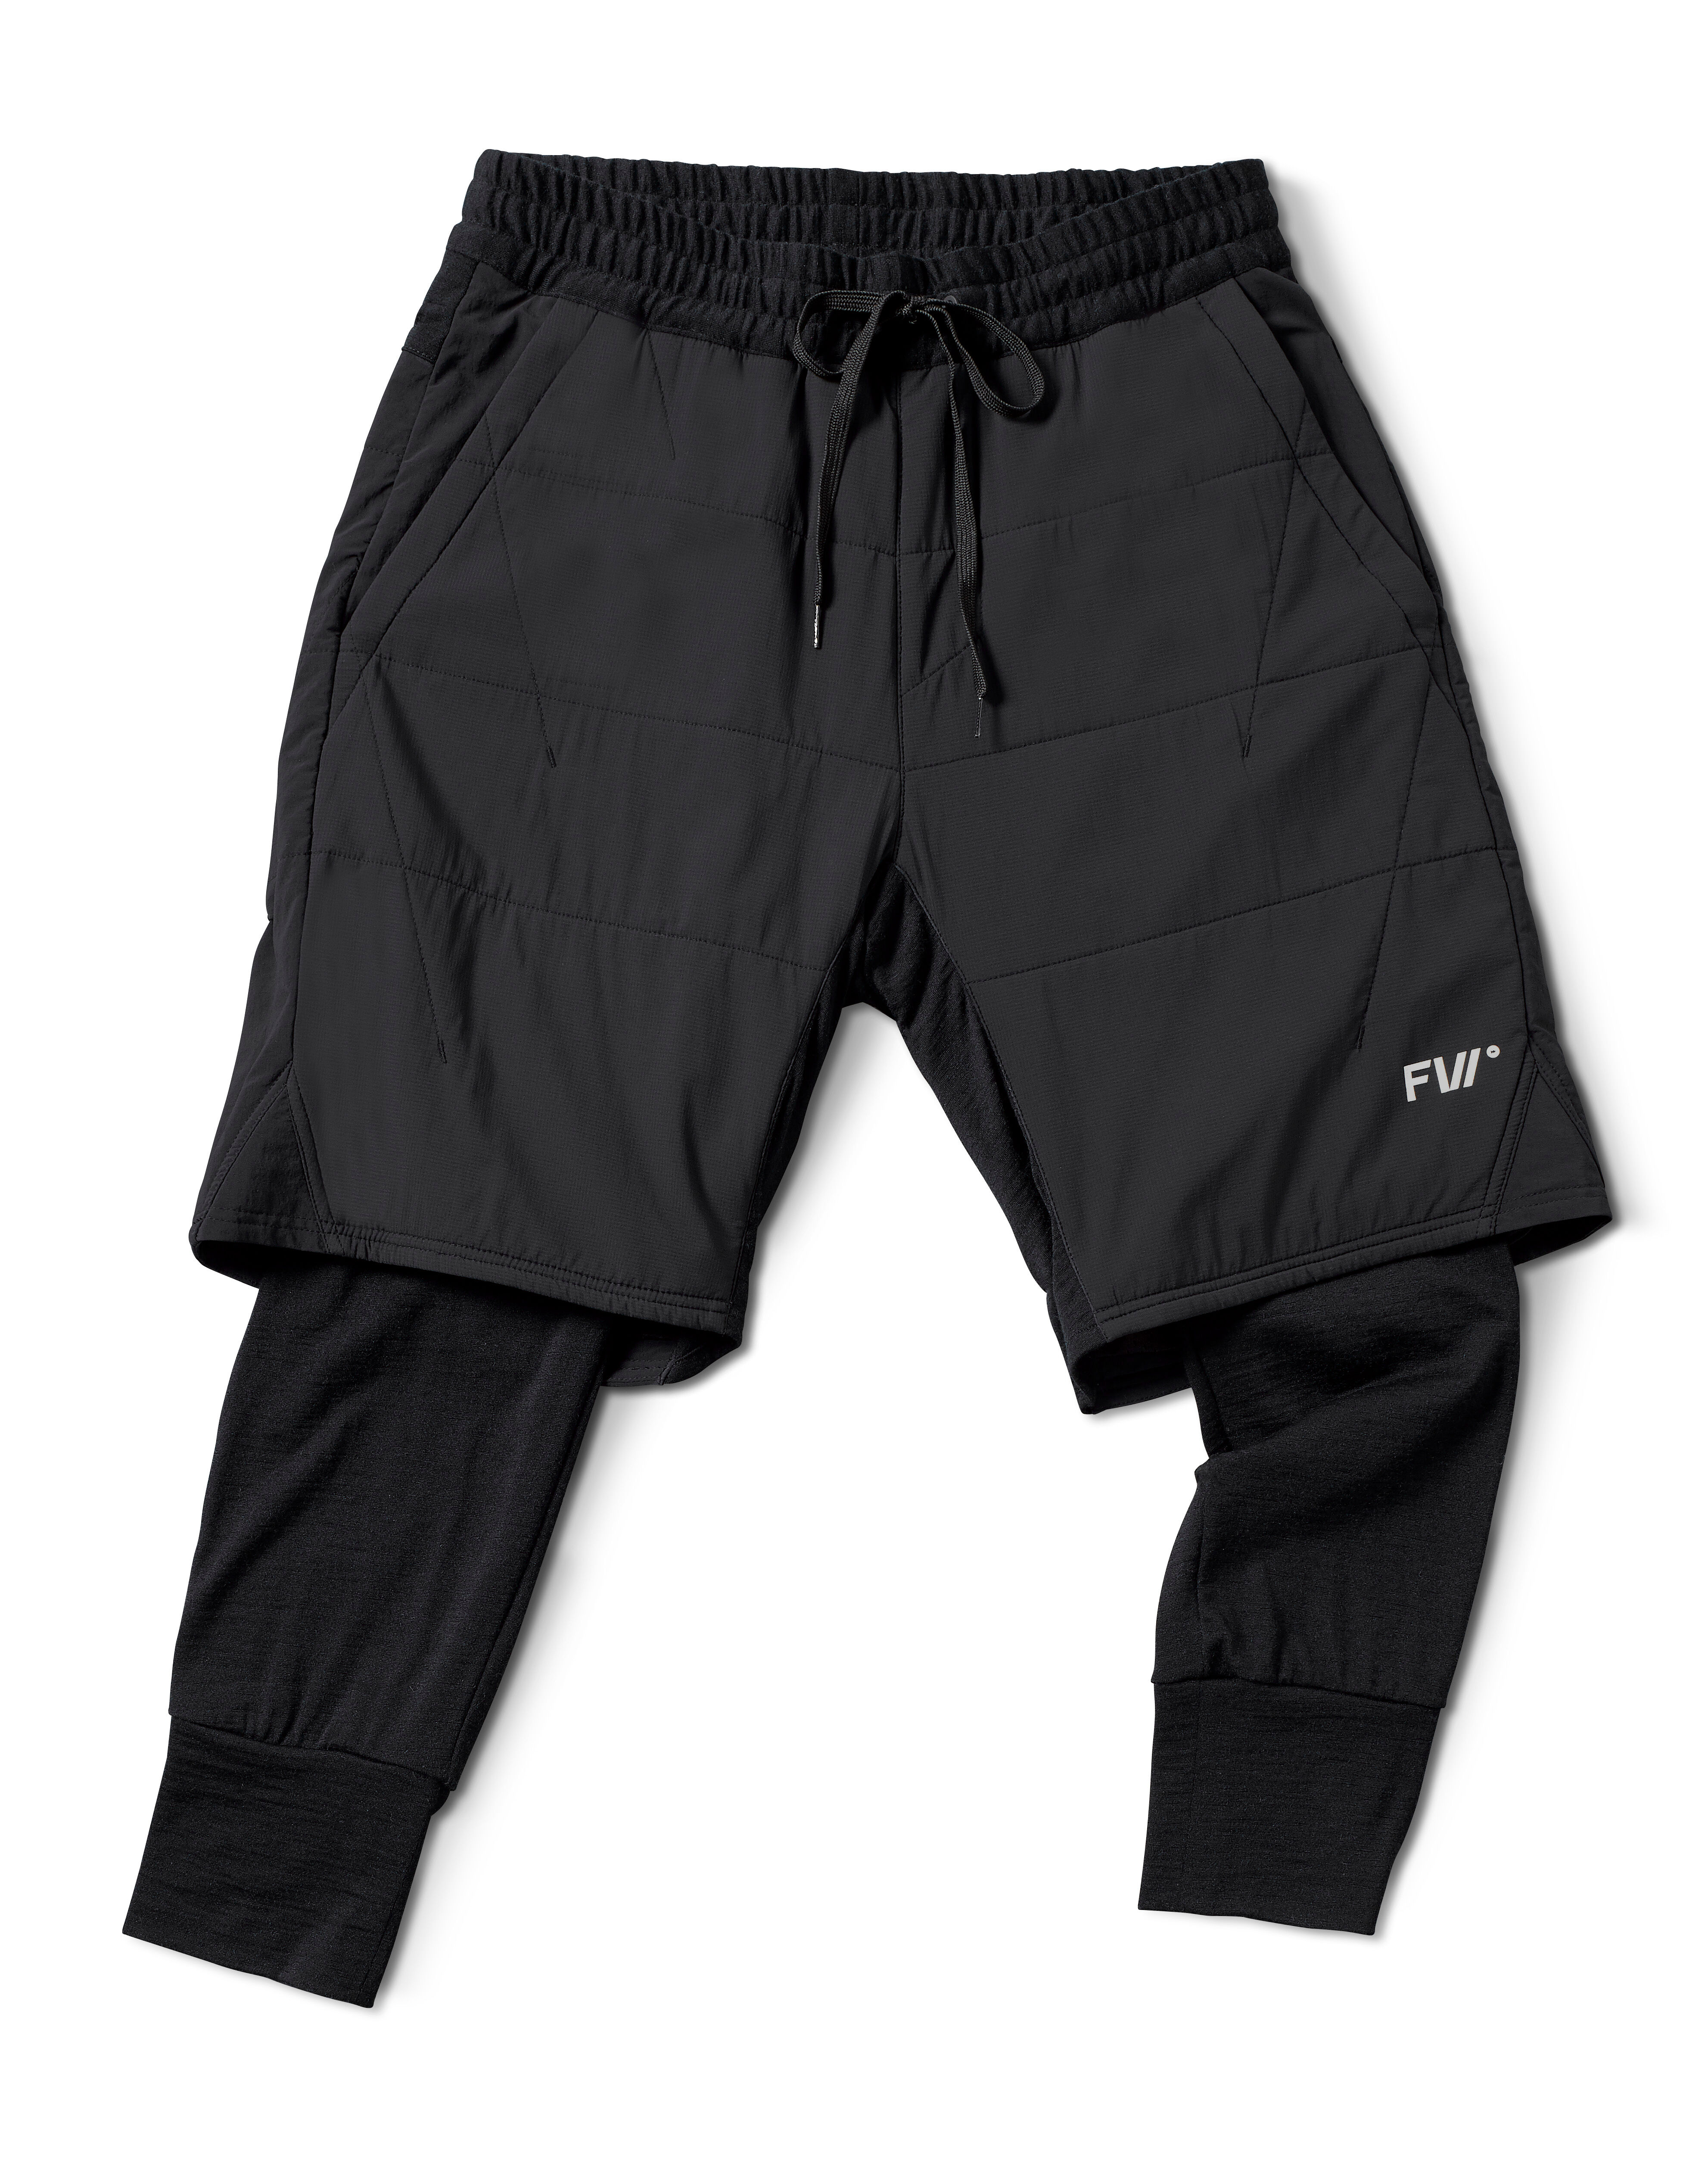 FW Apparel Manifest Hybrid Tour Pant - Ski pants - Men's